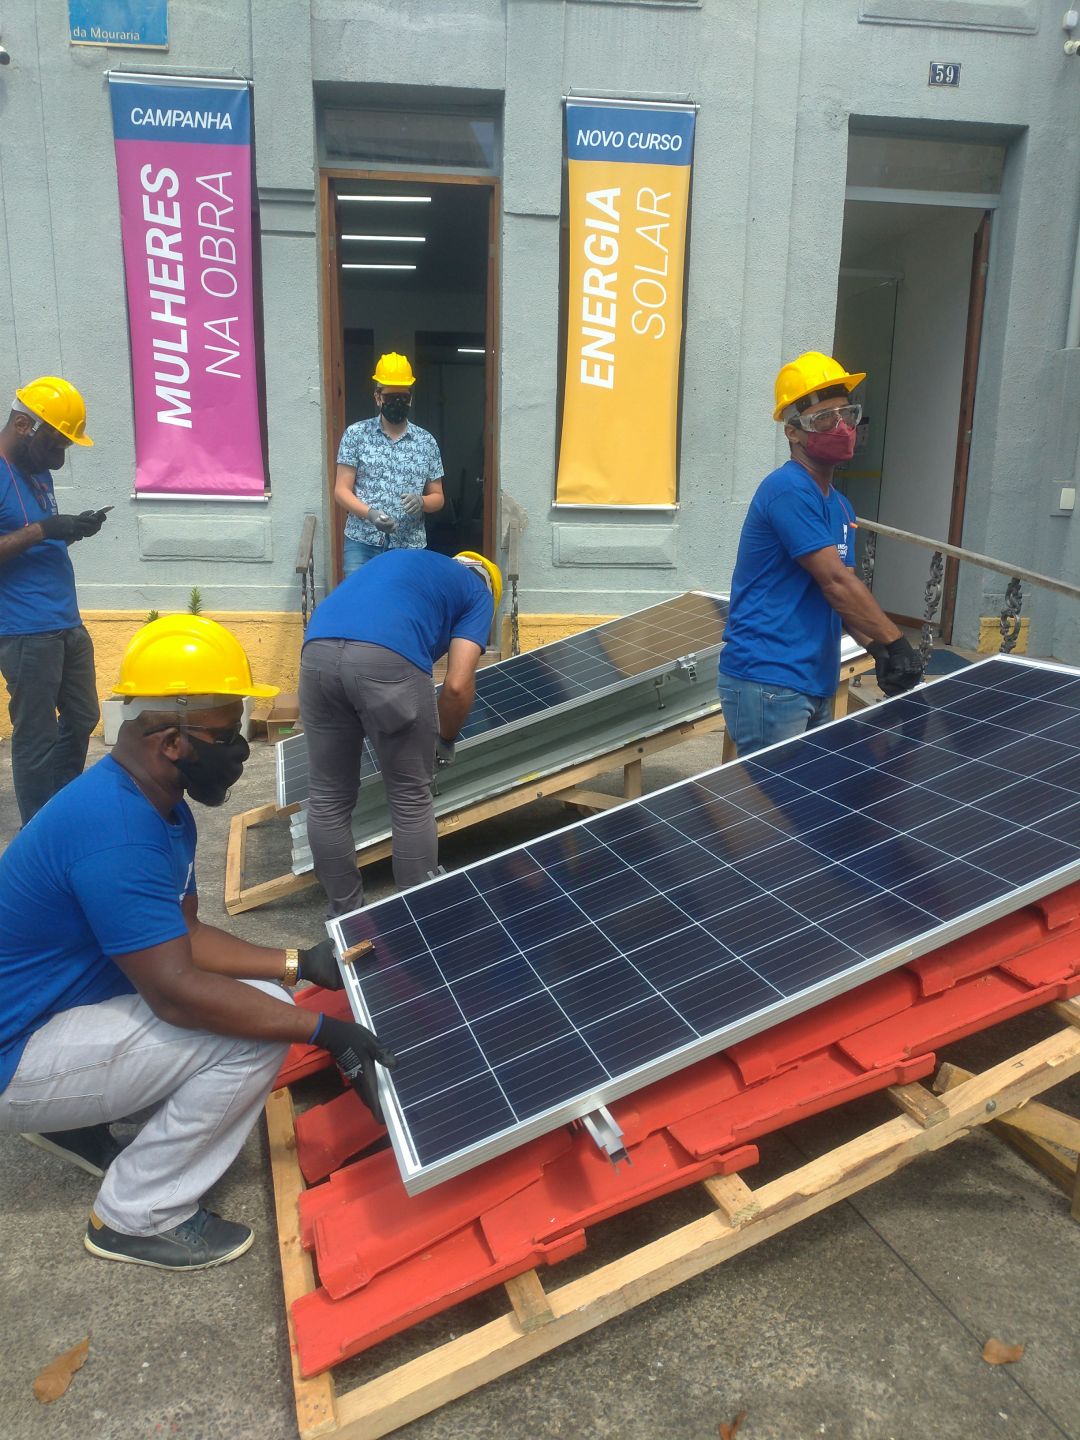 Barra Funda – Curso Instalador de Energia Solar Fotovoltaica + NR35